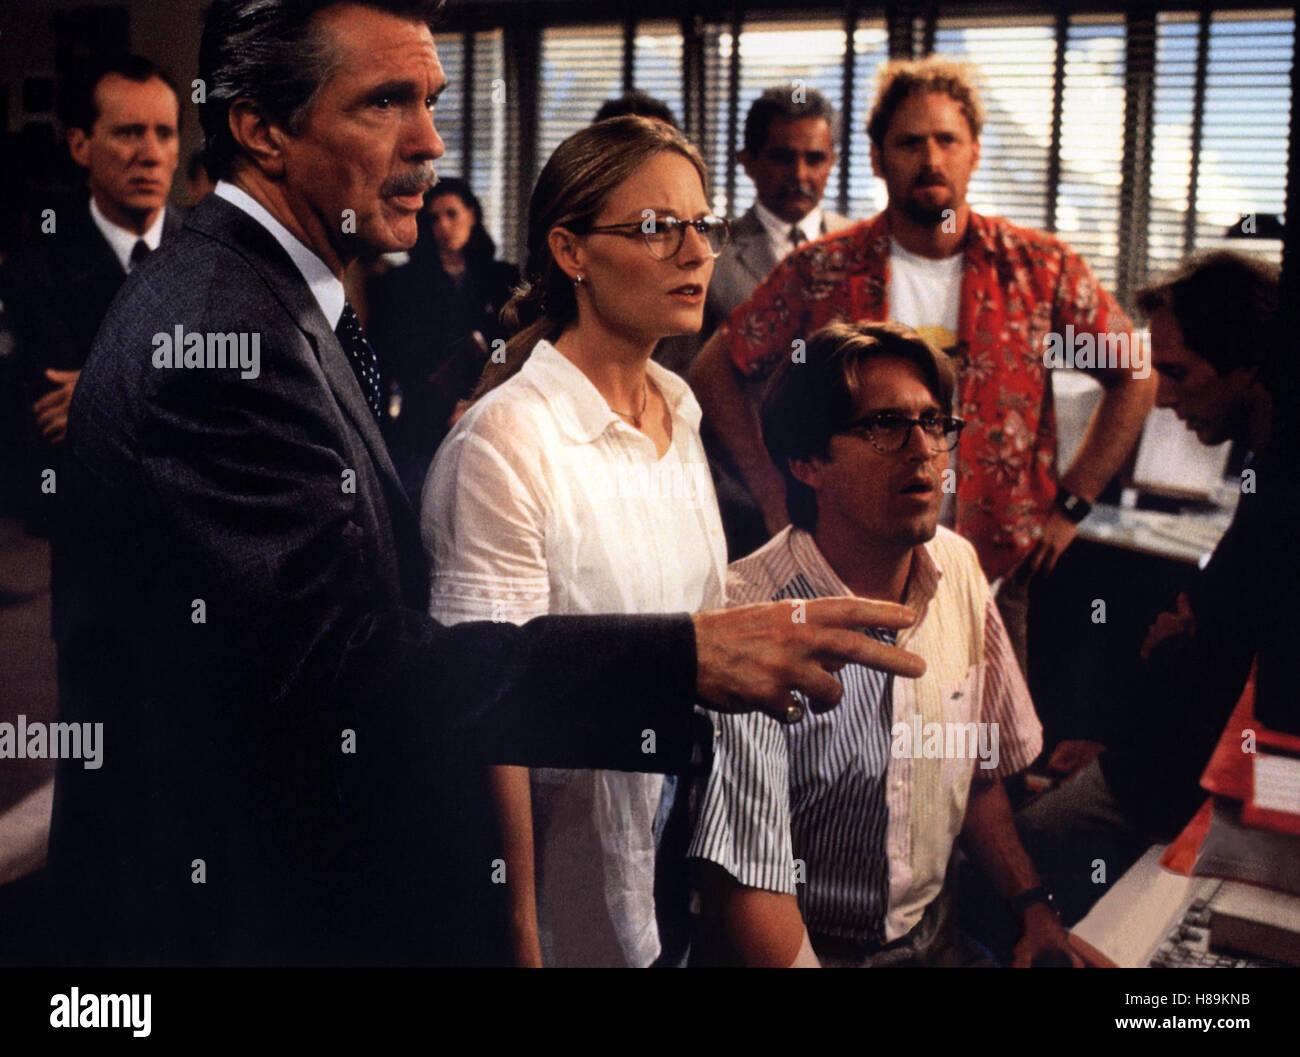 Contact, (CONTACT) USA 1997, Regie: Robert Zemeckis, JAMES WOODS, TOM SKERRITT, JODIE FOSTER, JAMES SPADER, Stichwort: Brille Stock Photo